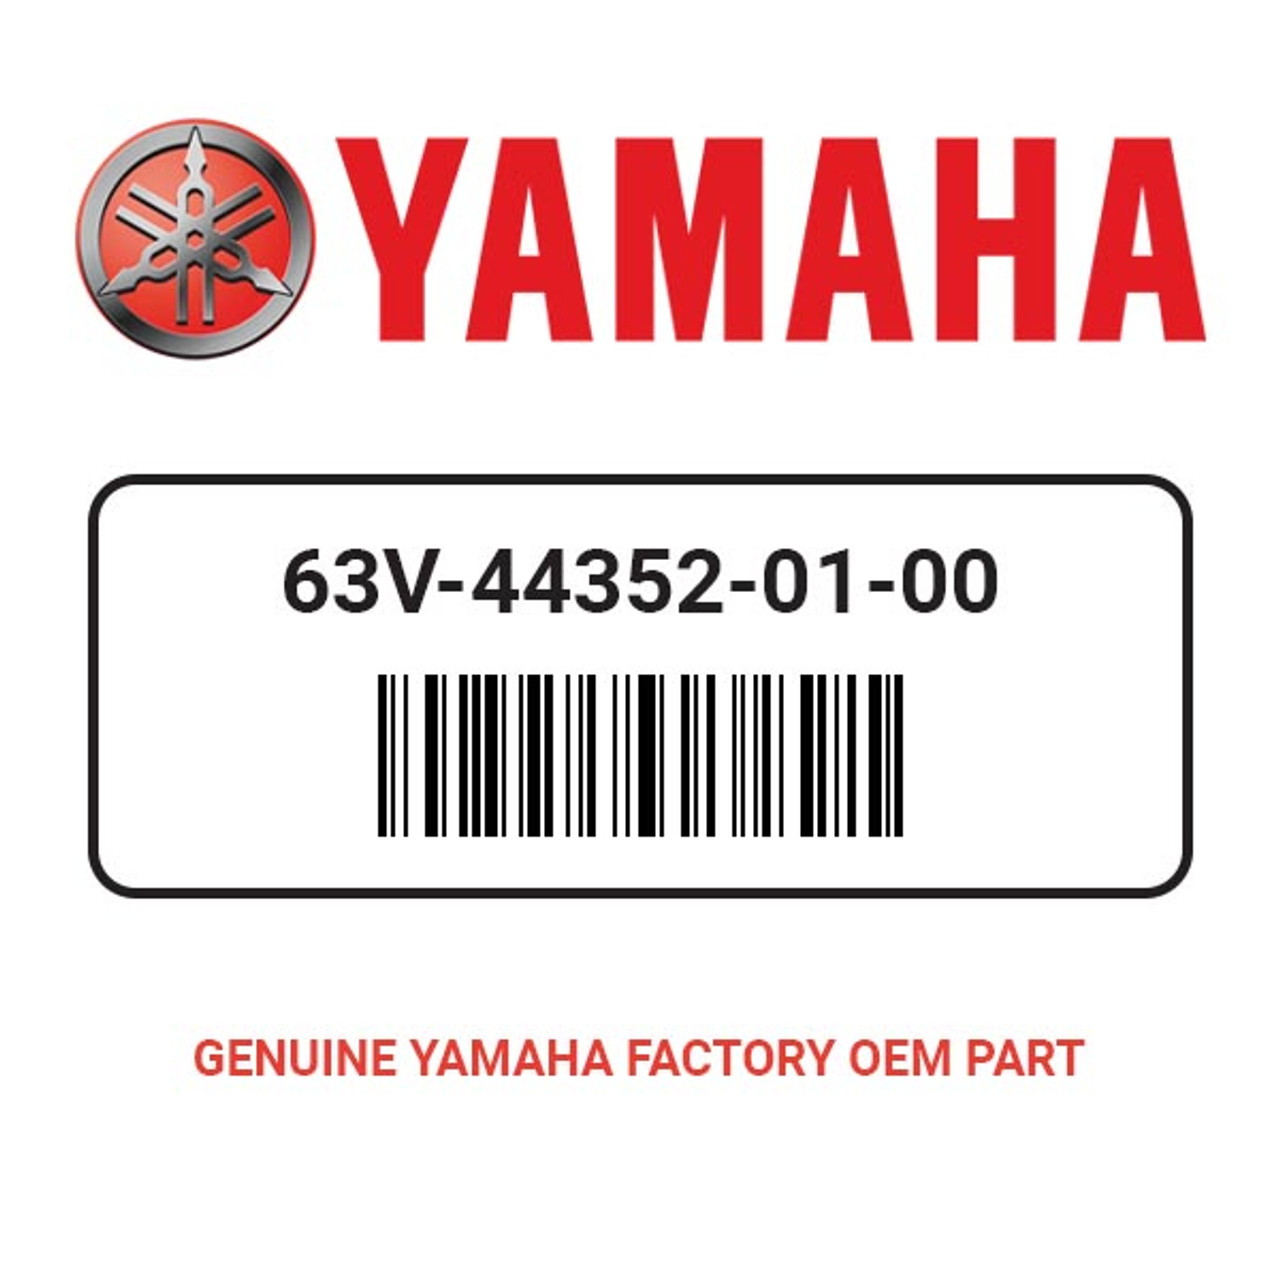 Yamaha - Impeller - 63V-44352-01-00